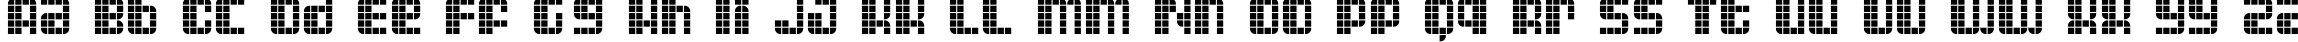 Пример написания английского алфавита шрифтом Astronaut III